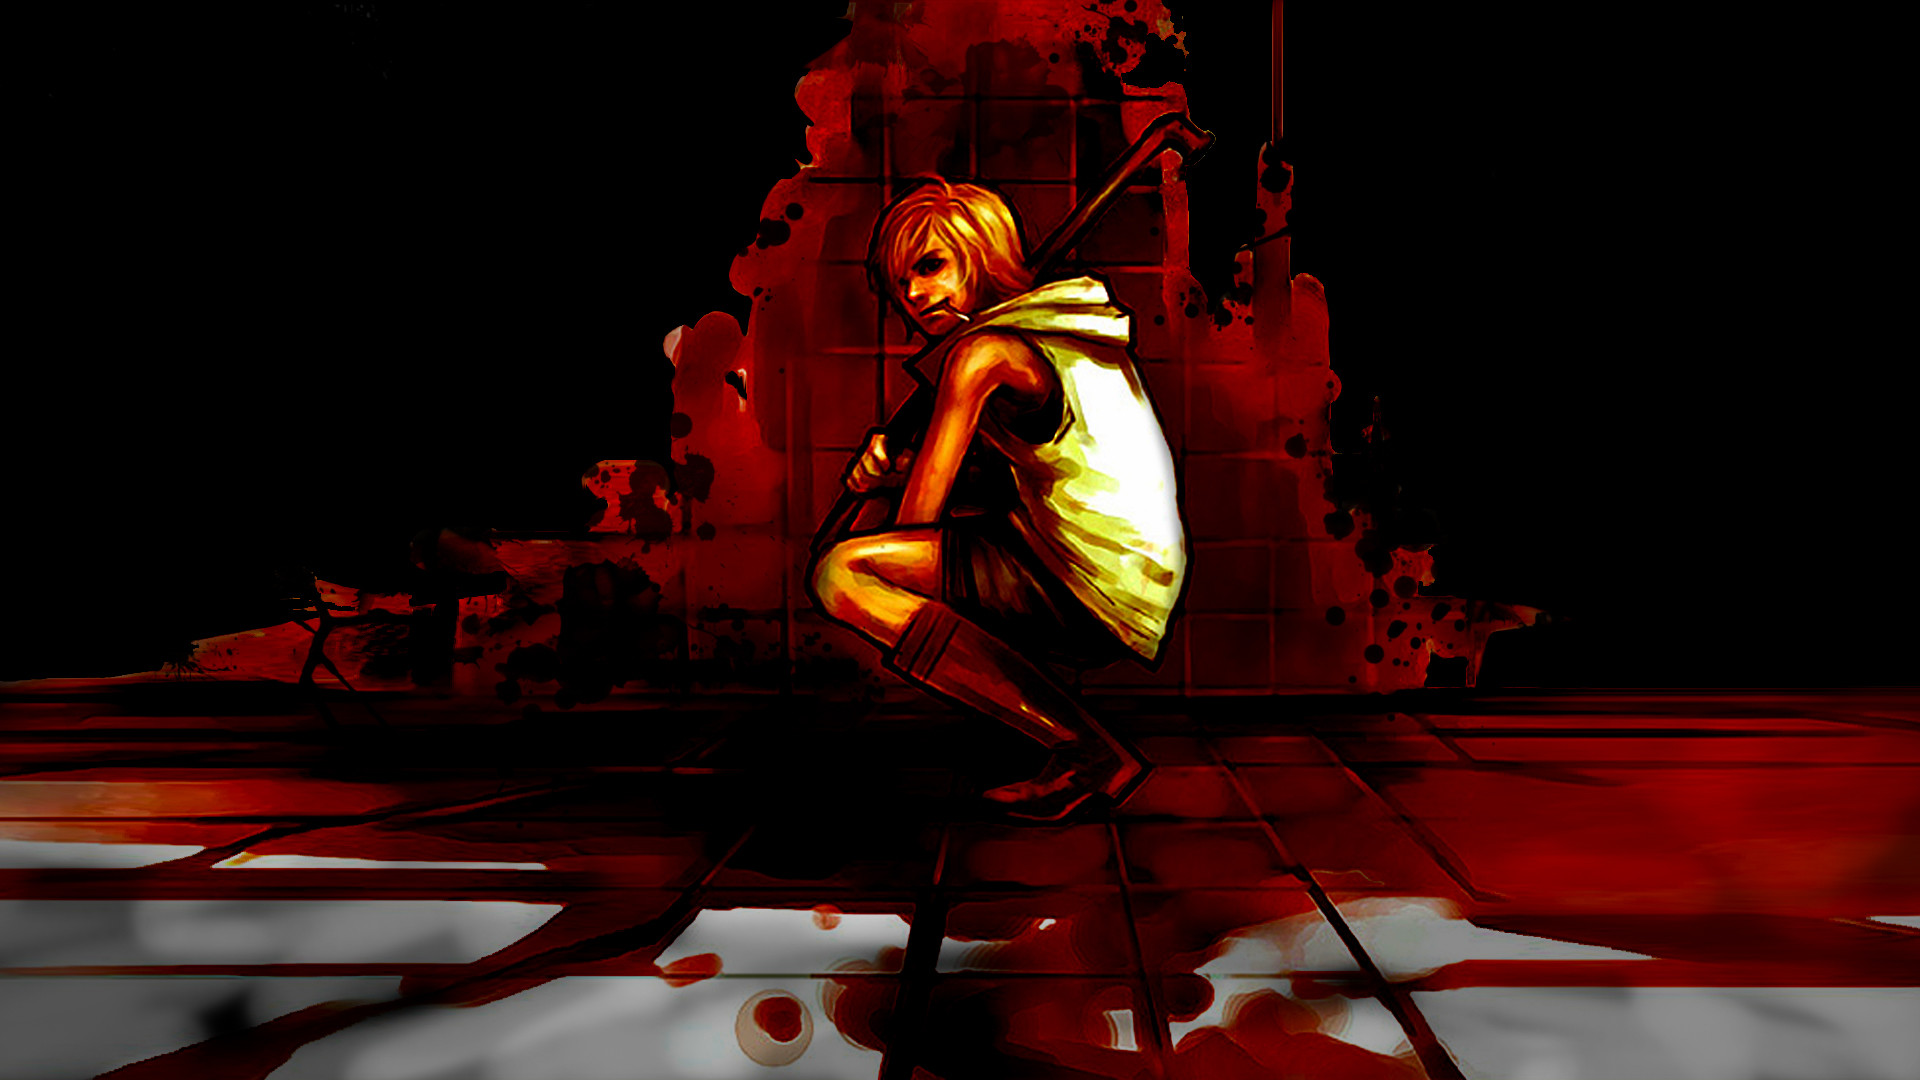 1920x1080 Silent Hill 3 Bloody Wallpaper v1.0 by Razpootin